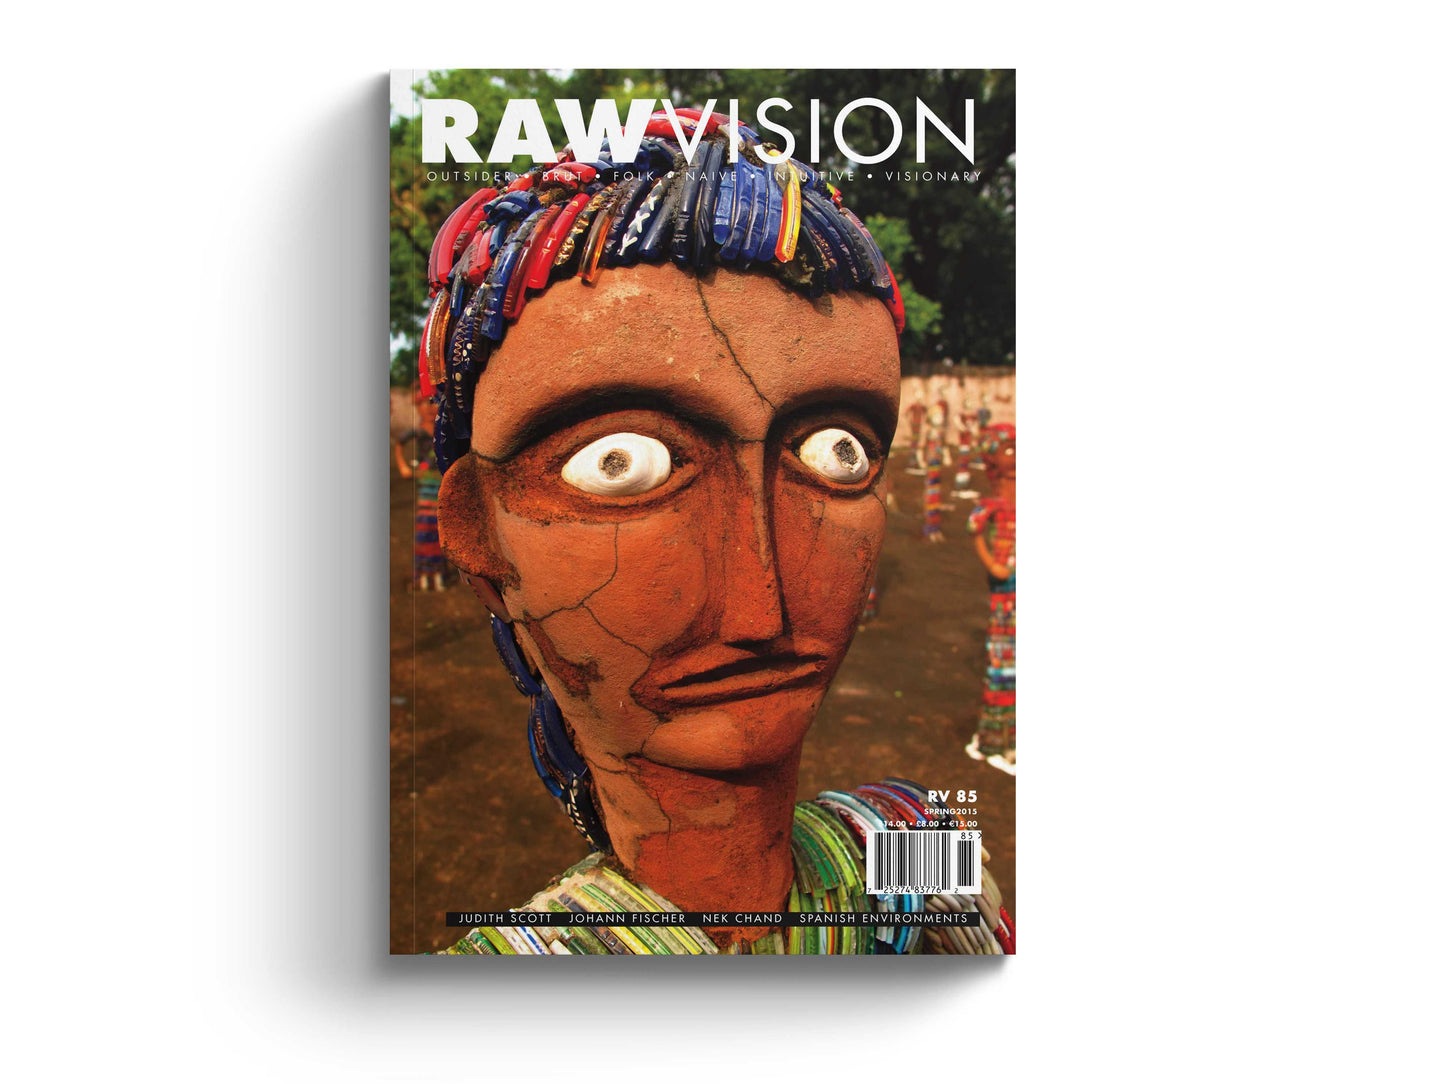 Raw Vision Magazine Issue #85